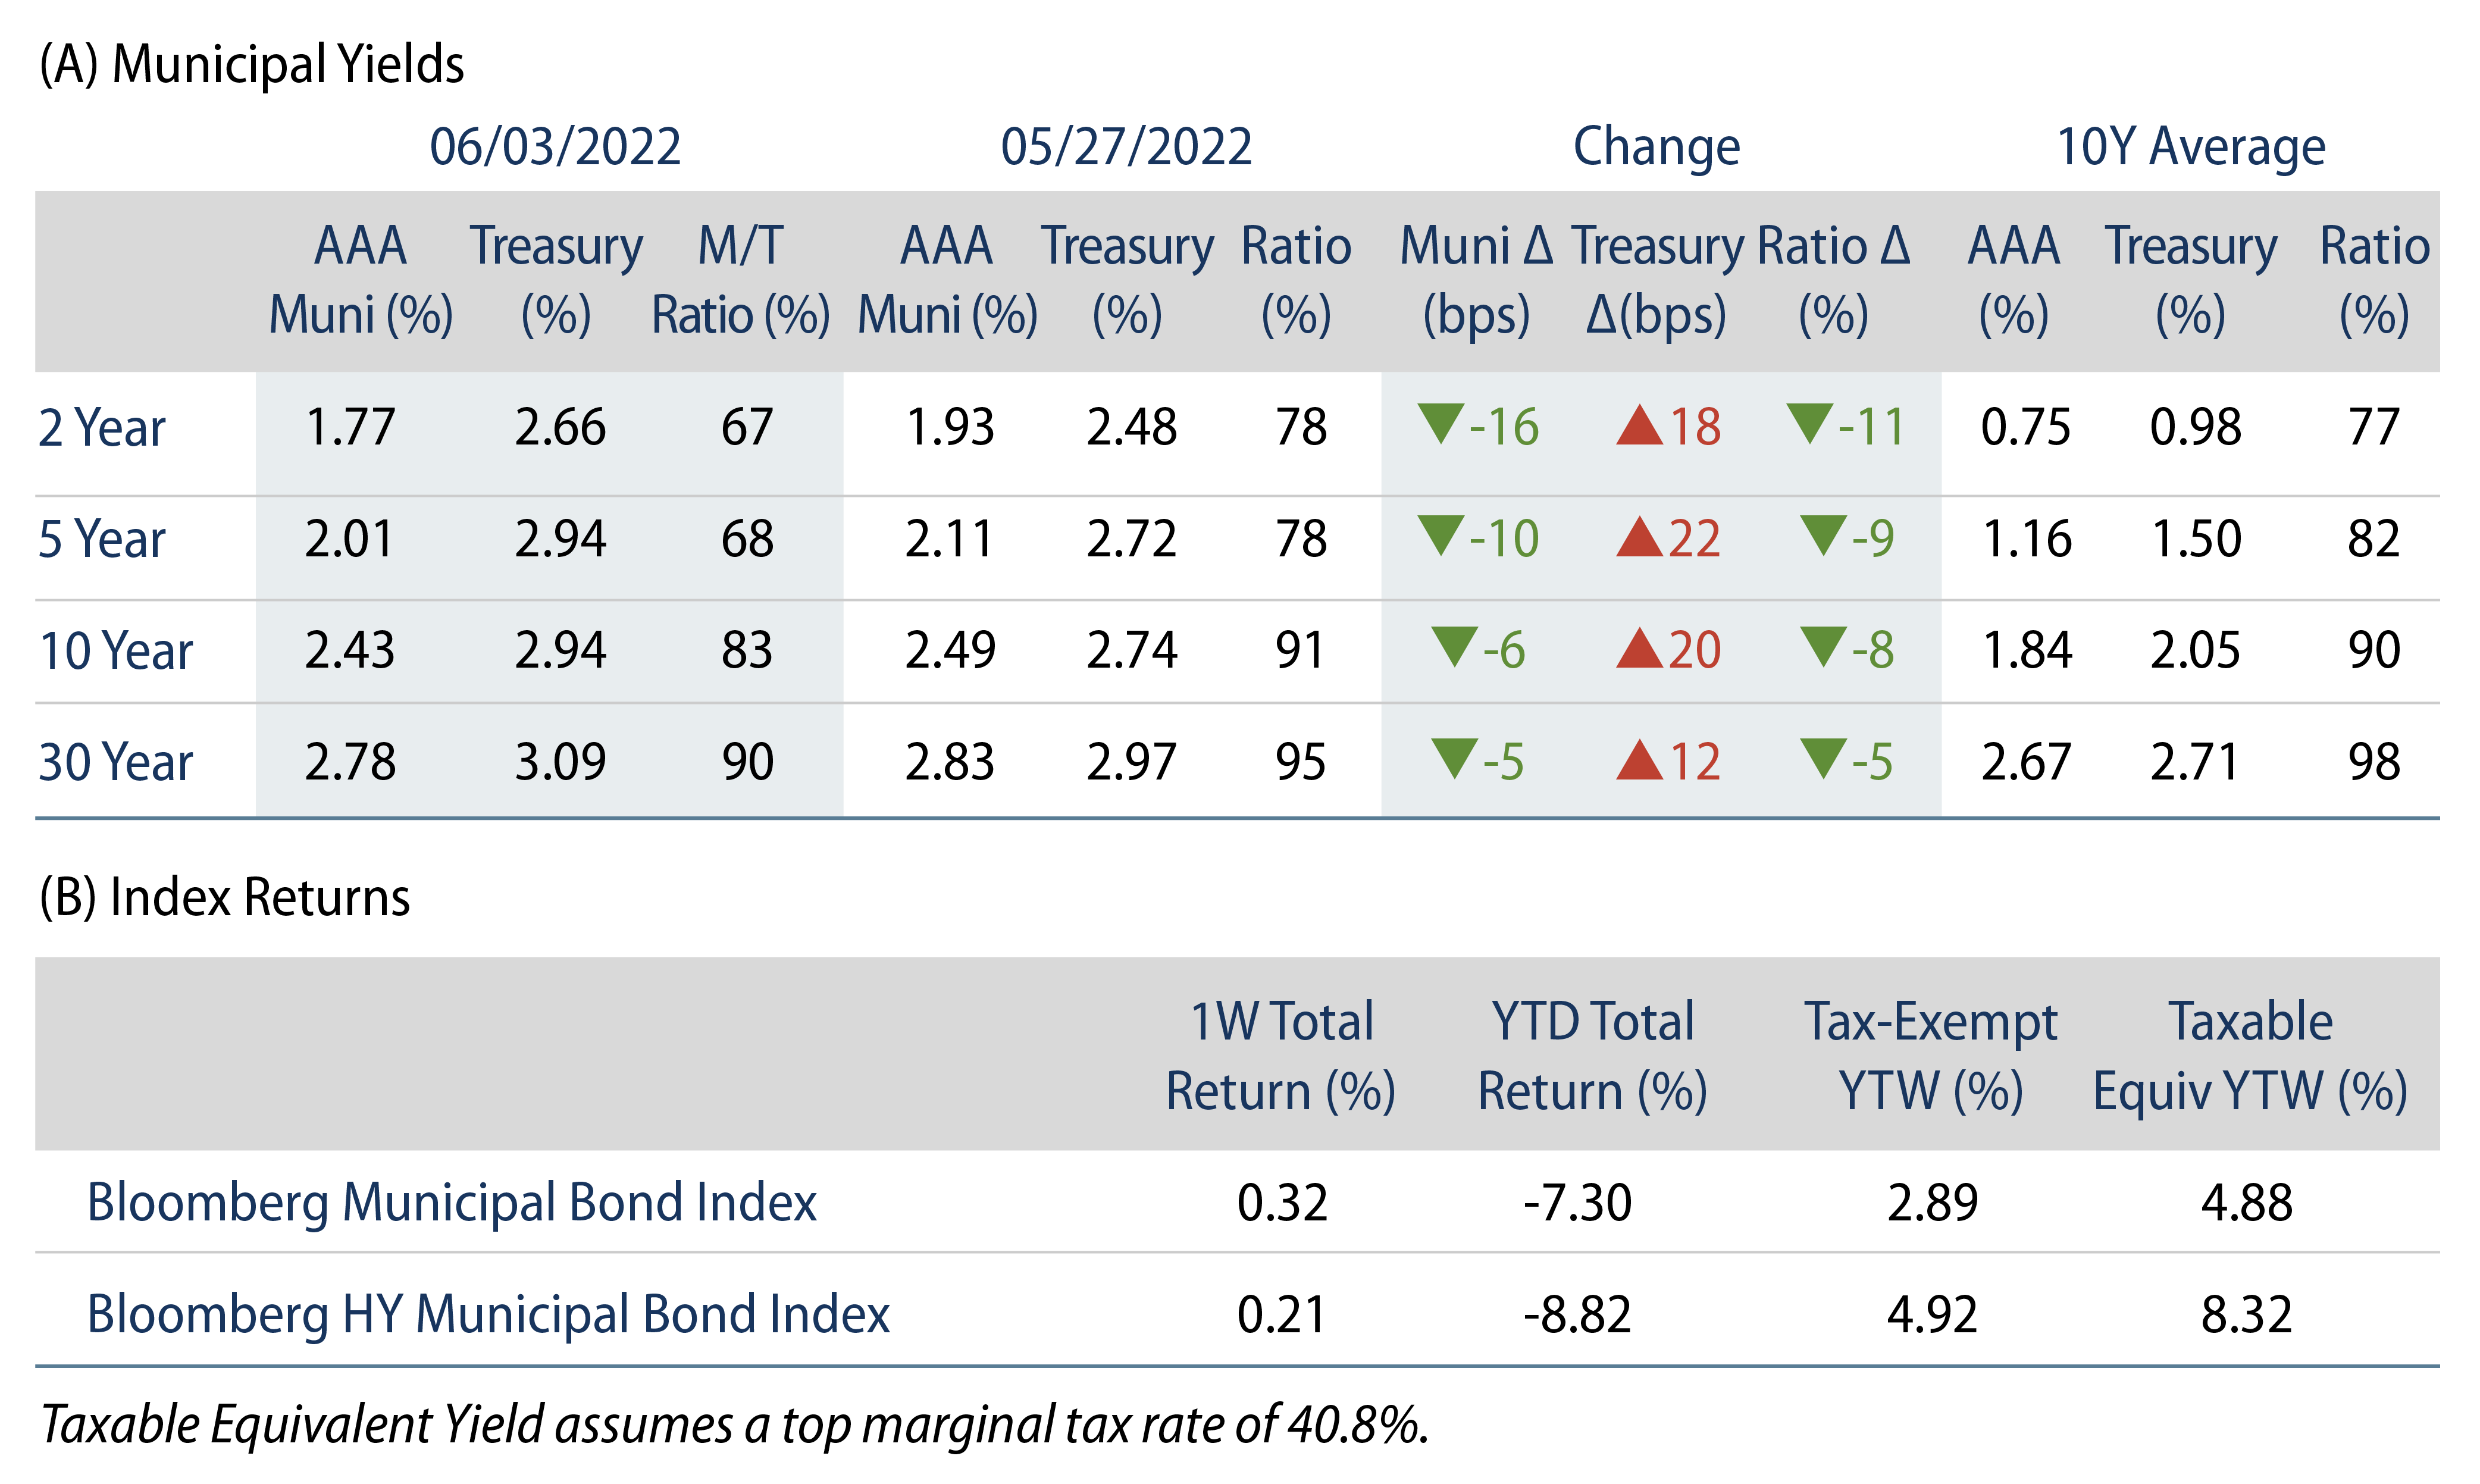 Explore Municipal Bond Yields and Index Return